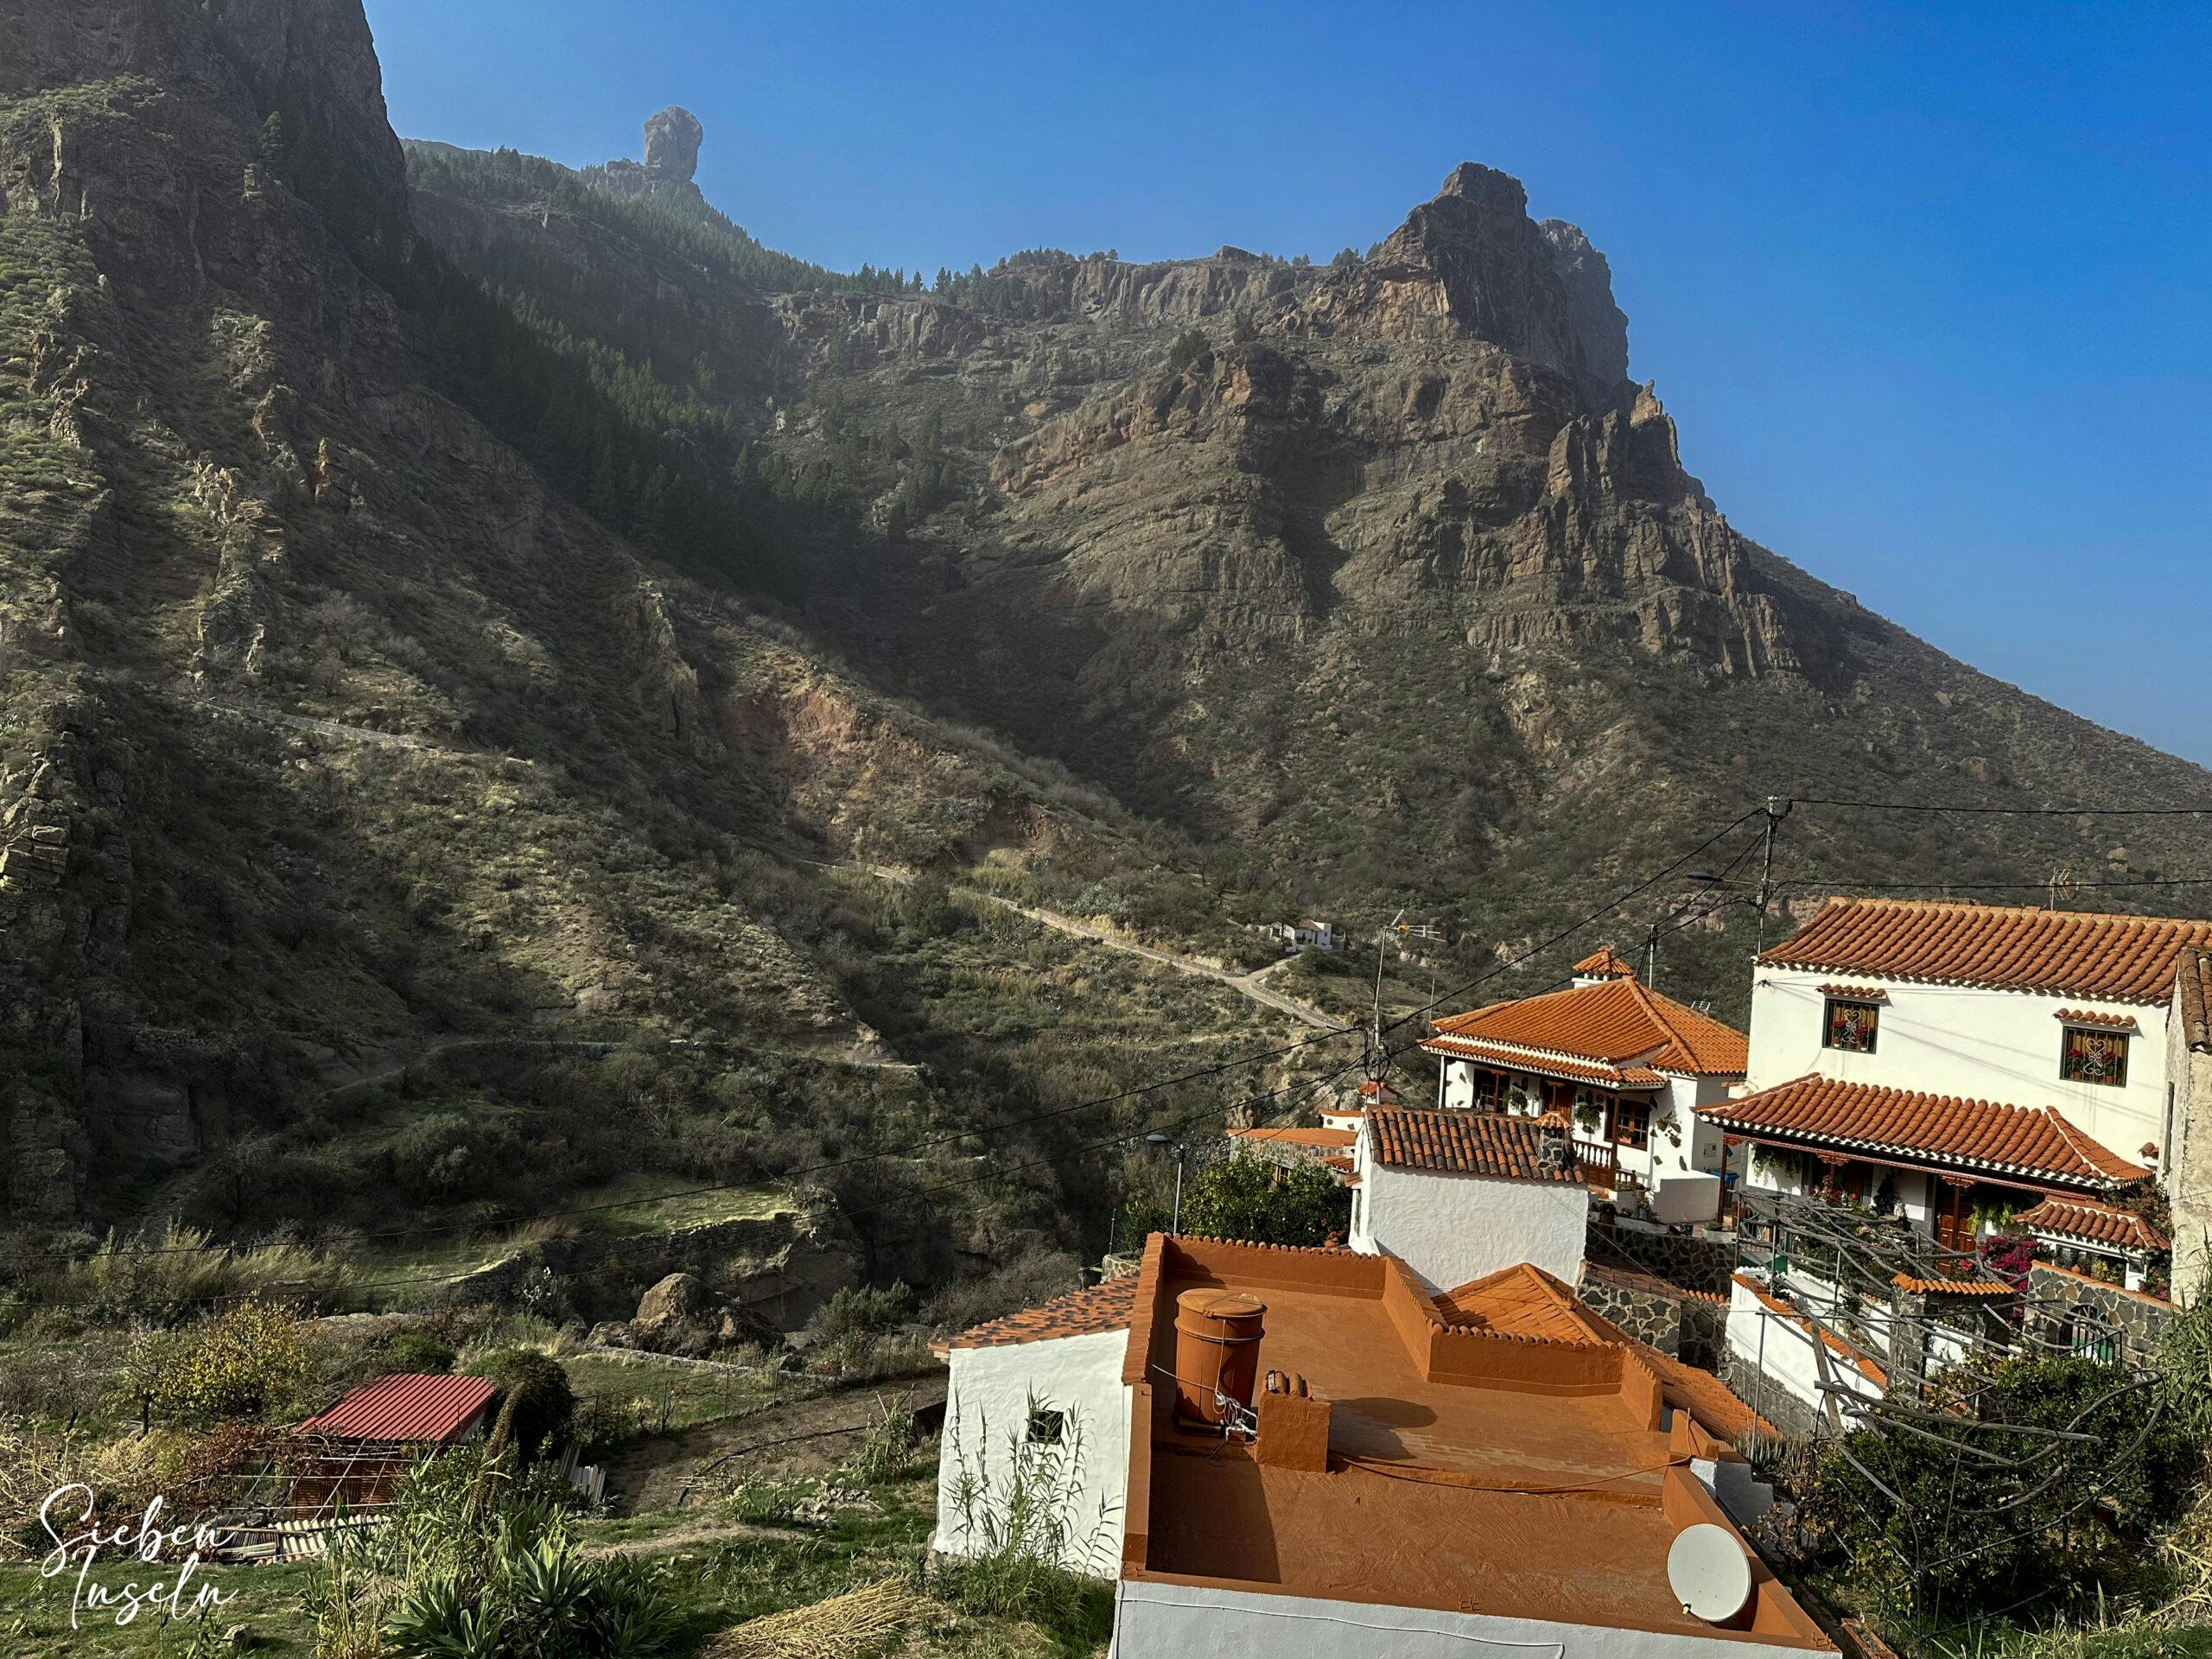 Hiking around the small Canarian village of La Culata